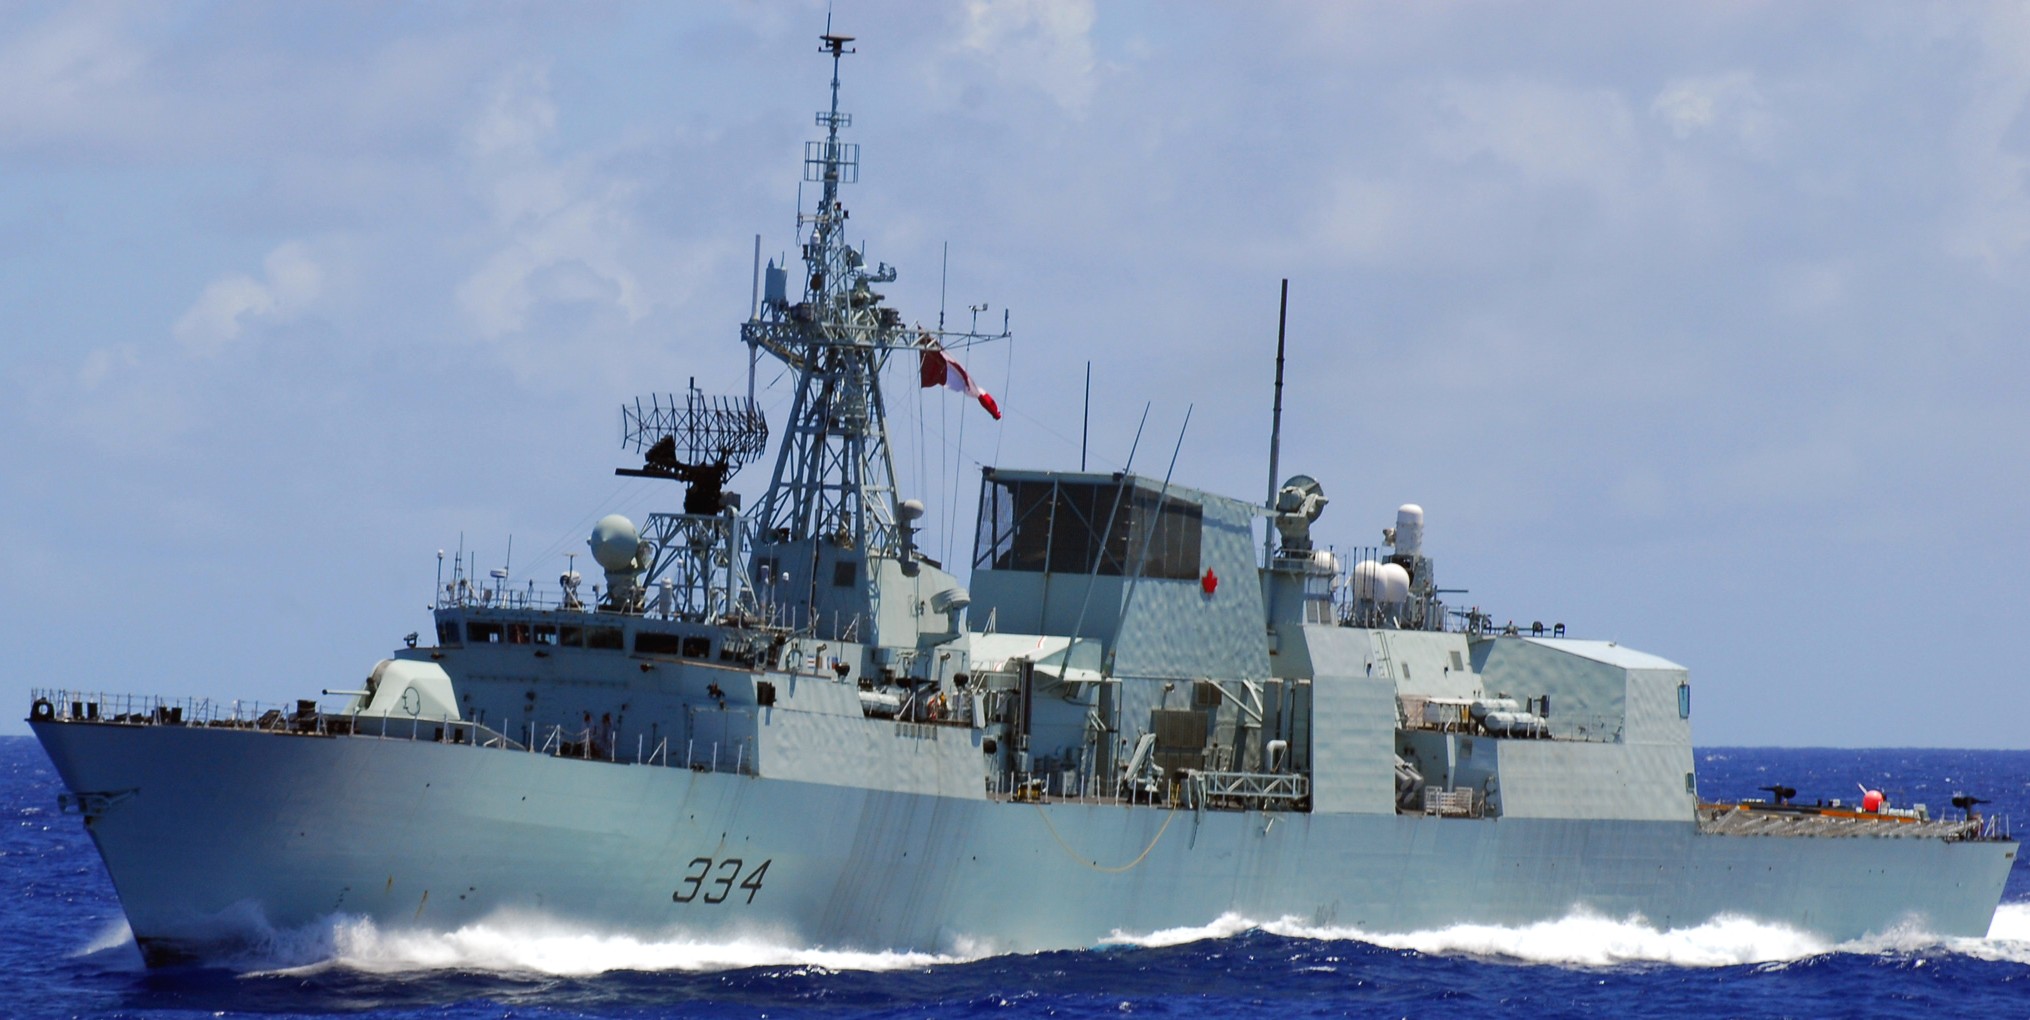 ffh-334 hmcs regina halifax class helicopter patrol frigate ncsm royal canadian navy 23